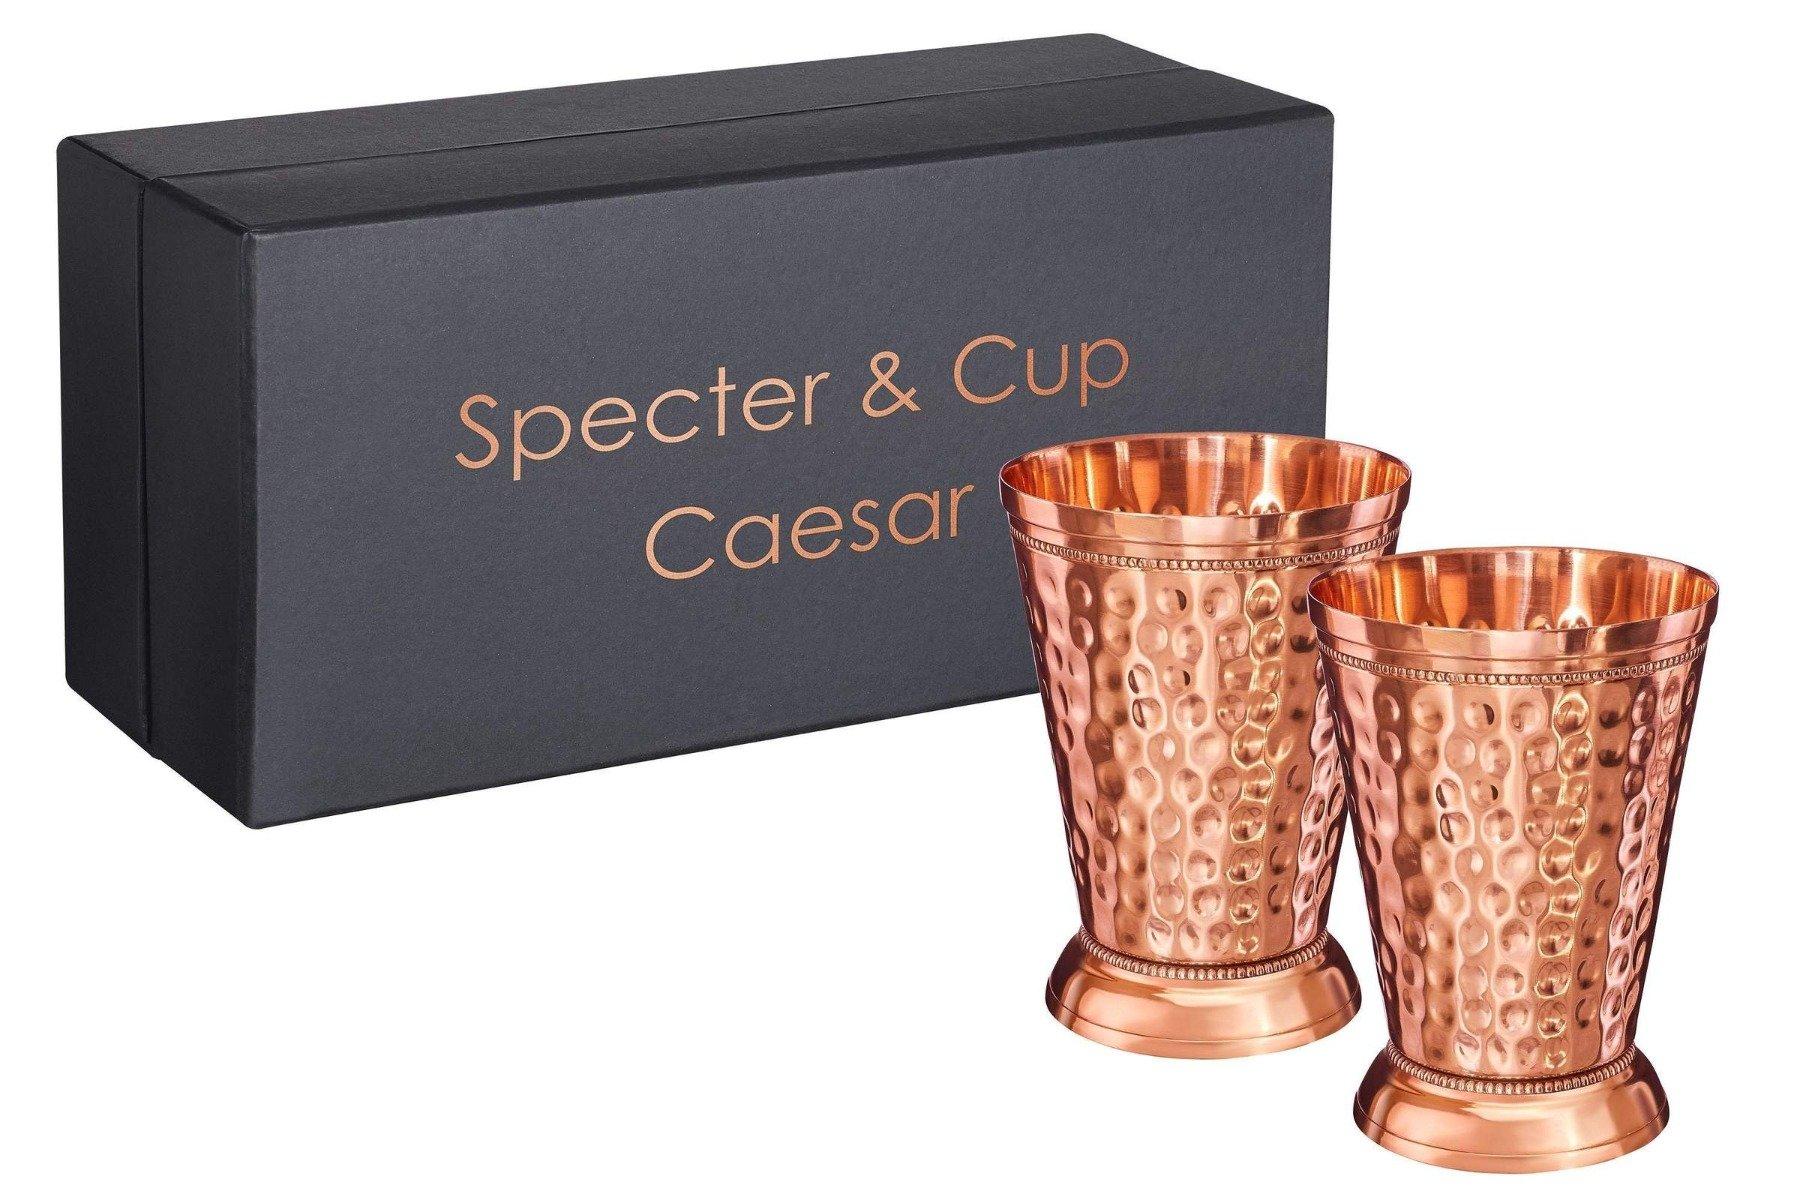 Specter & Cup Kupferbecher-Set Caesar  